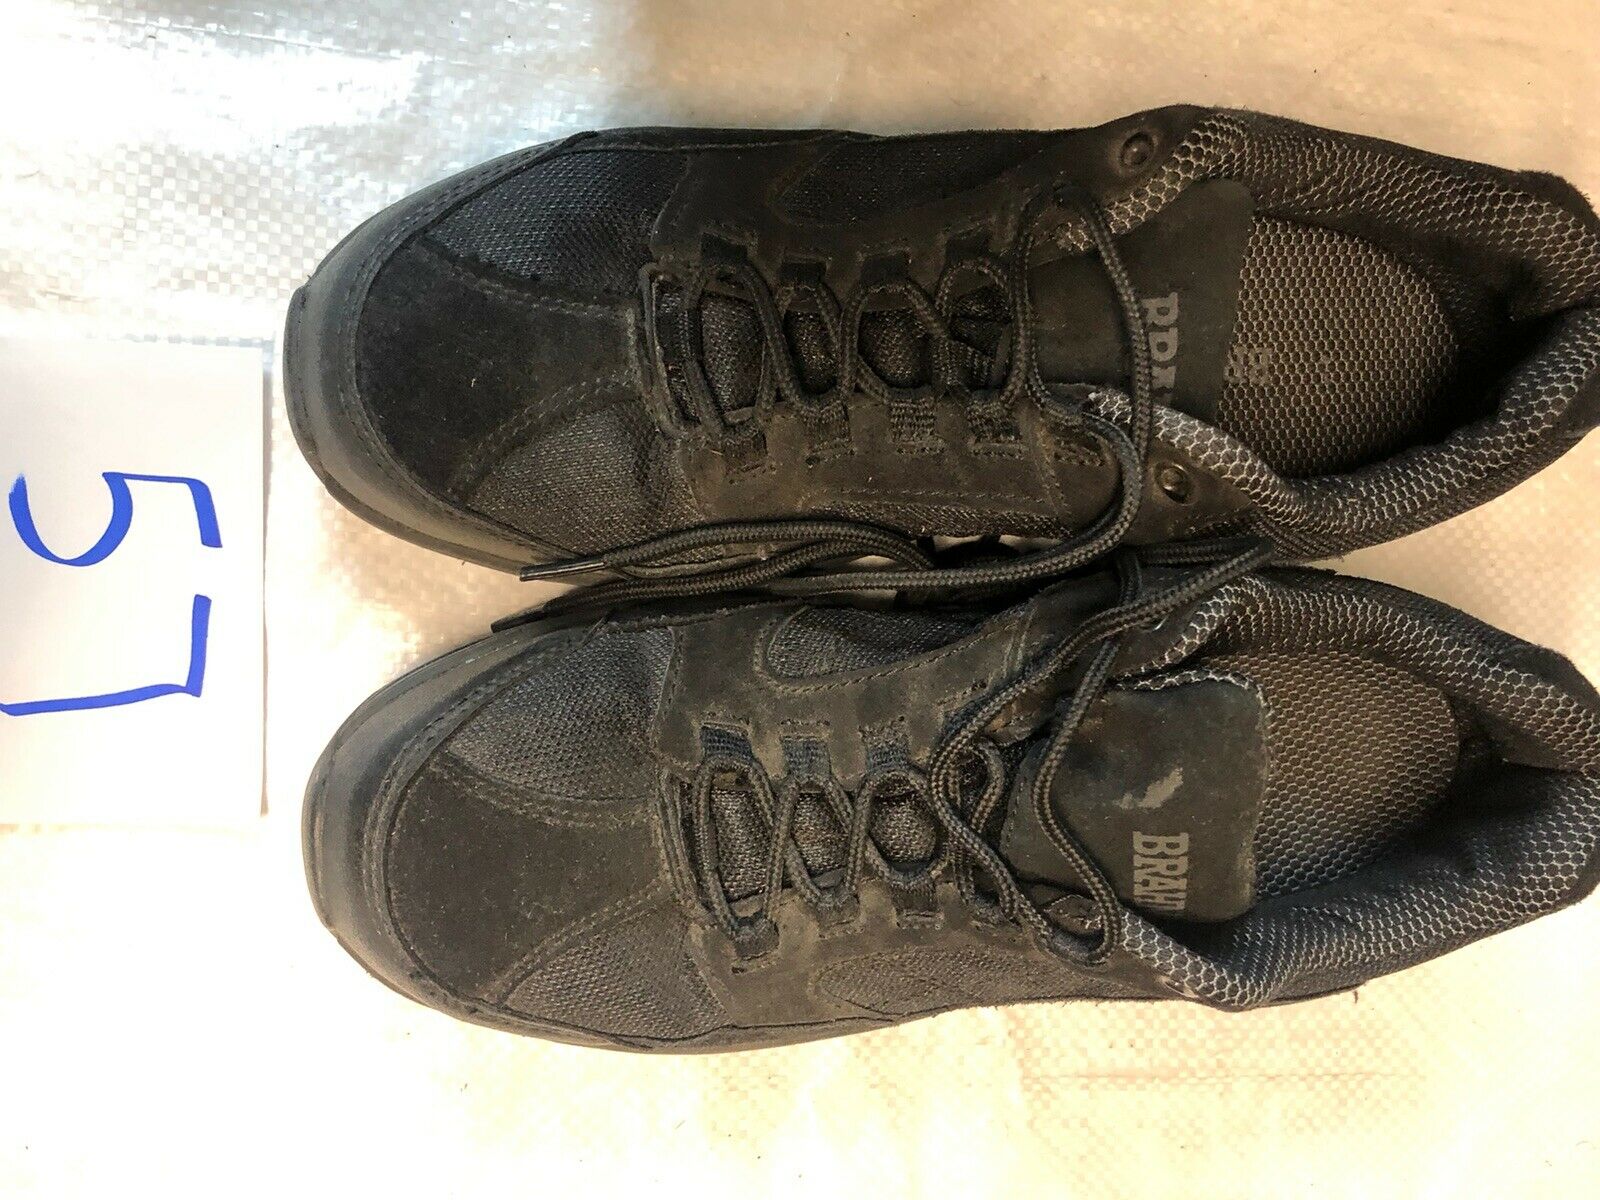 Brahma Astm F2413-11 Mens Black Leather Sz 11 Steel Toe Low Top Work Shoes